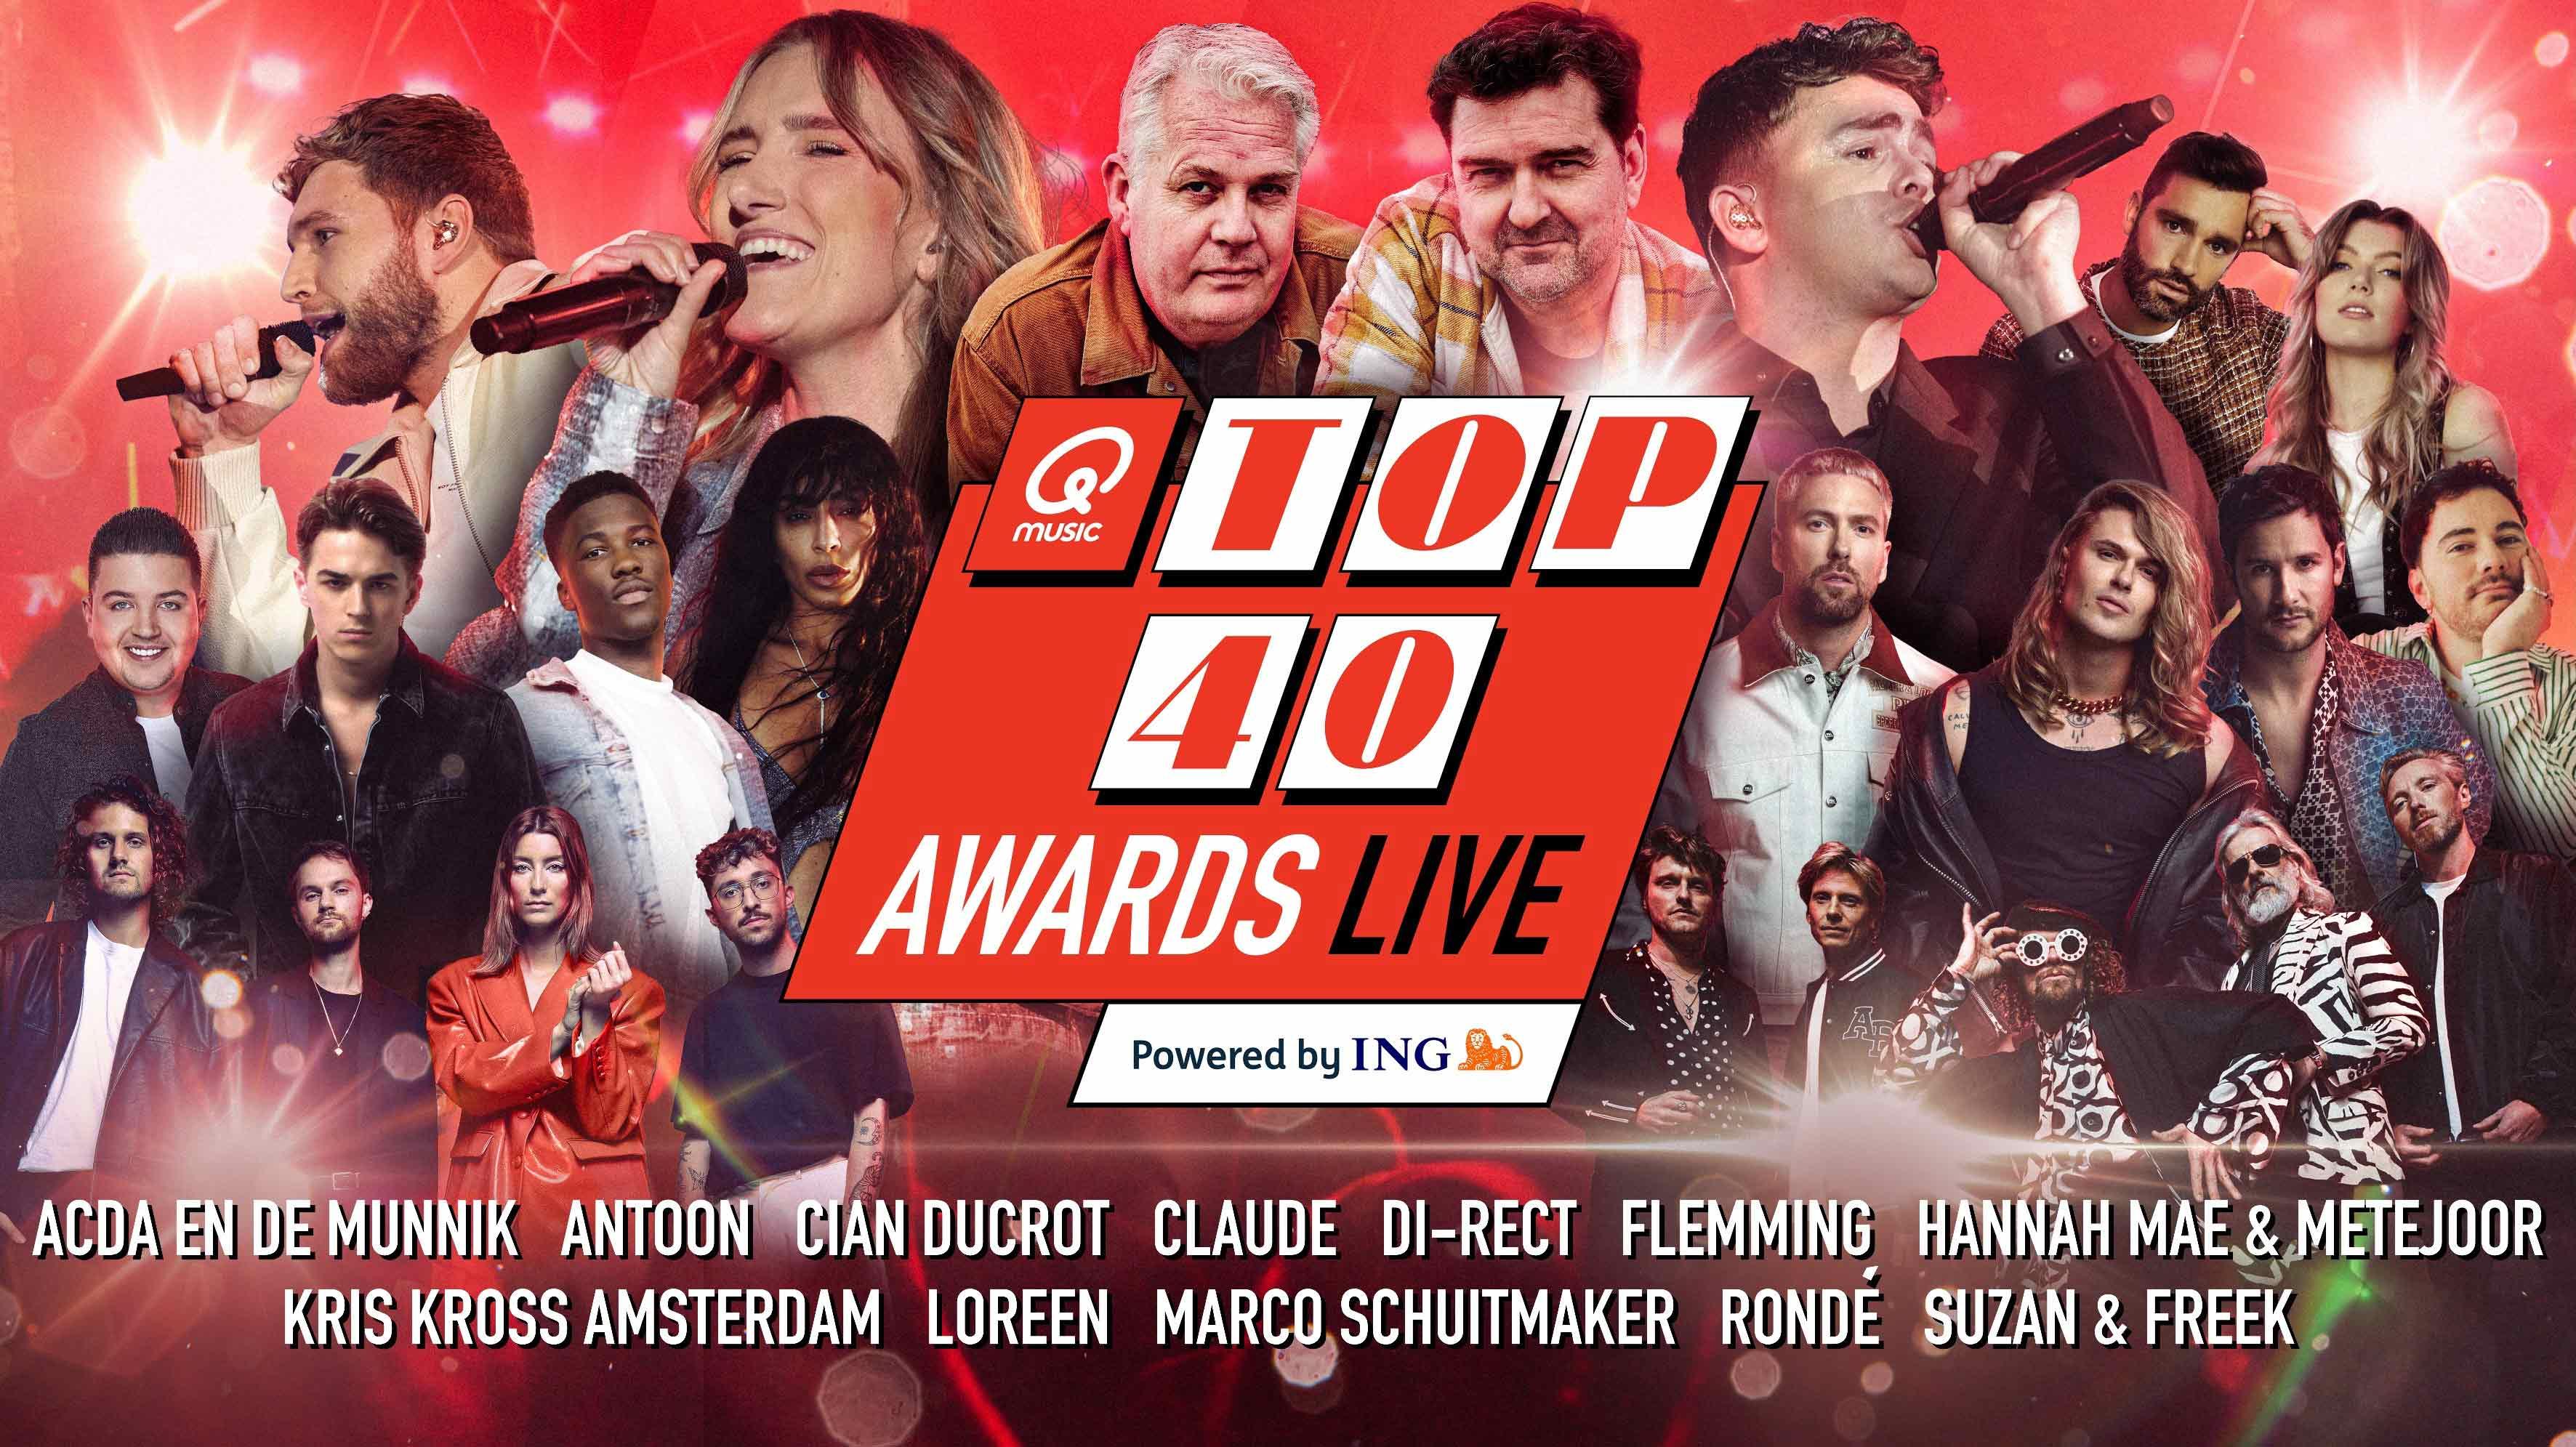 Qmusic Top 40 Awards Live